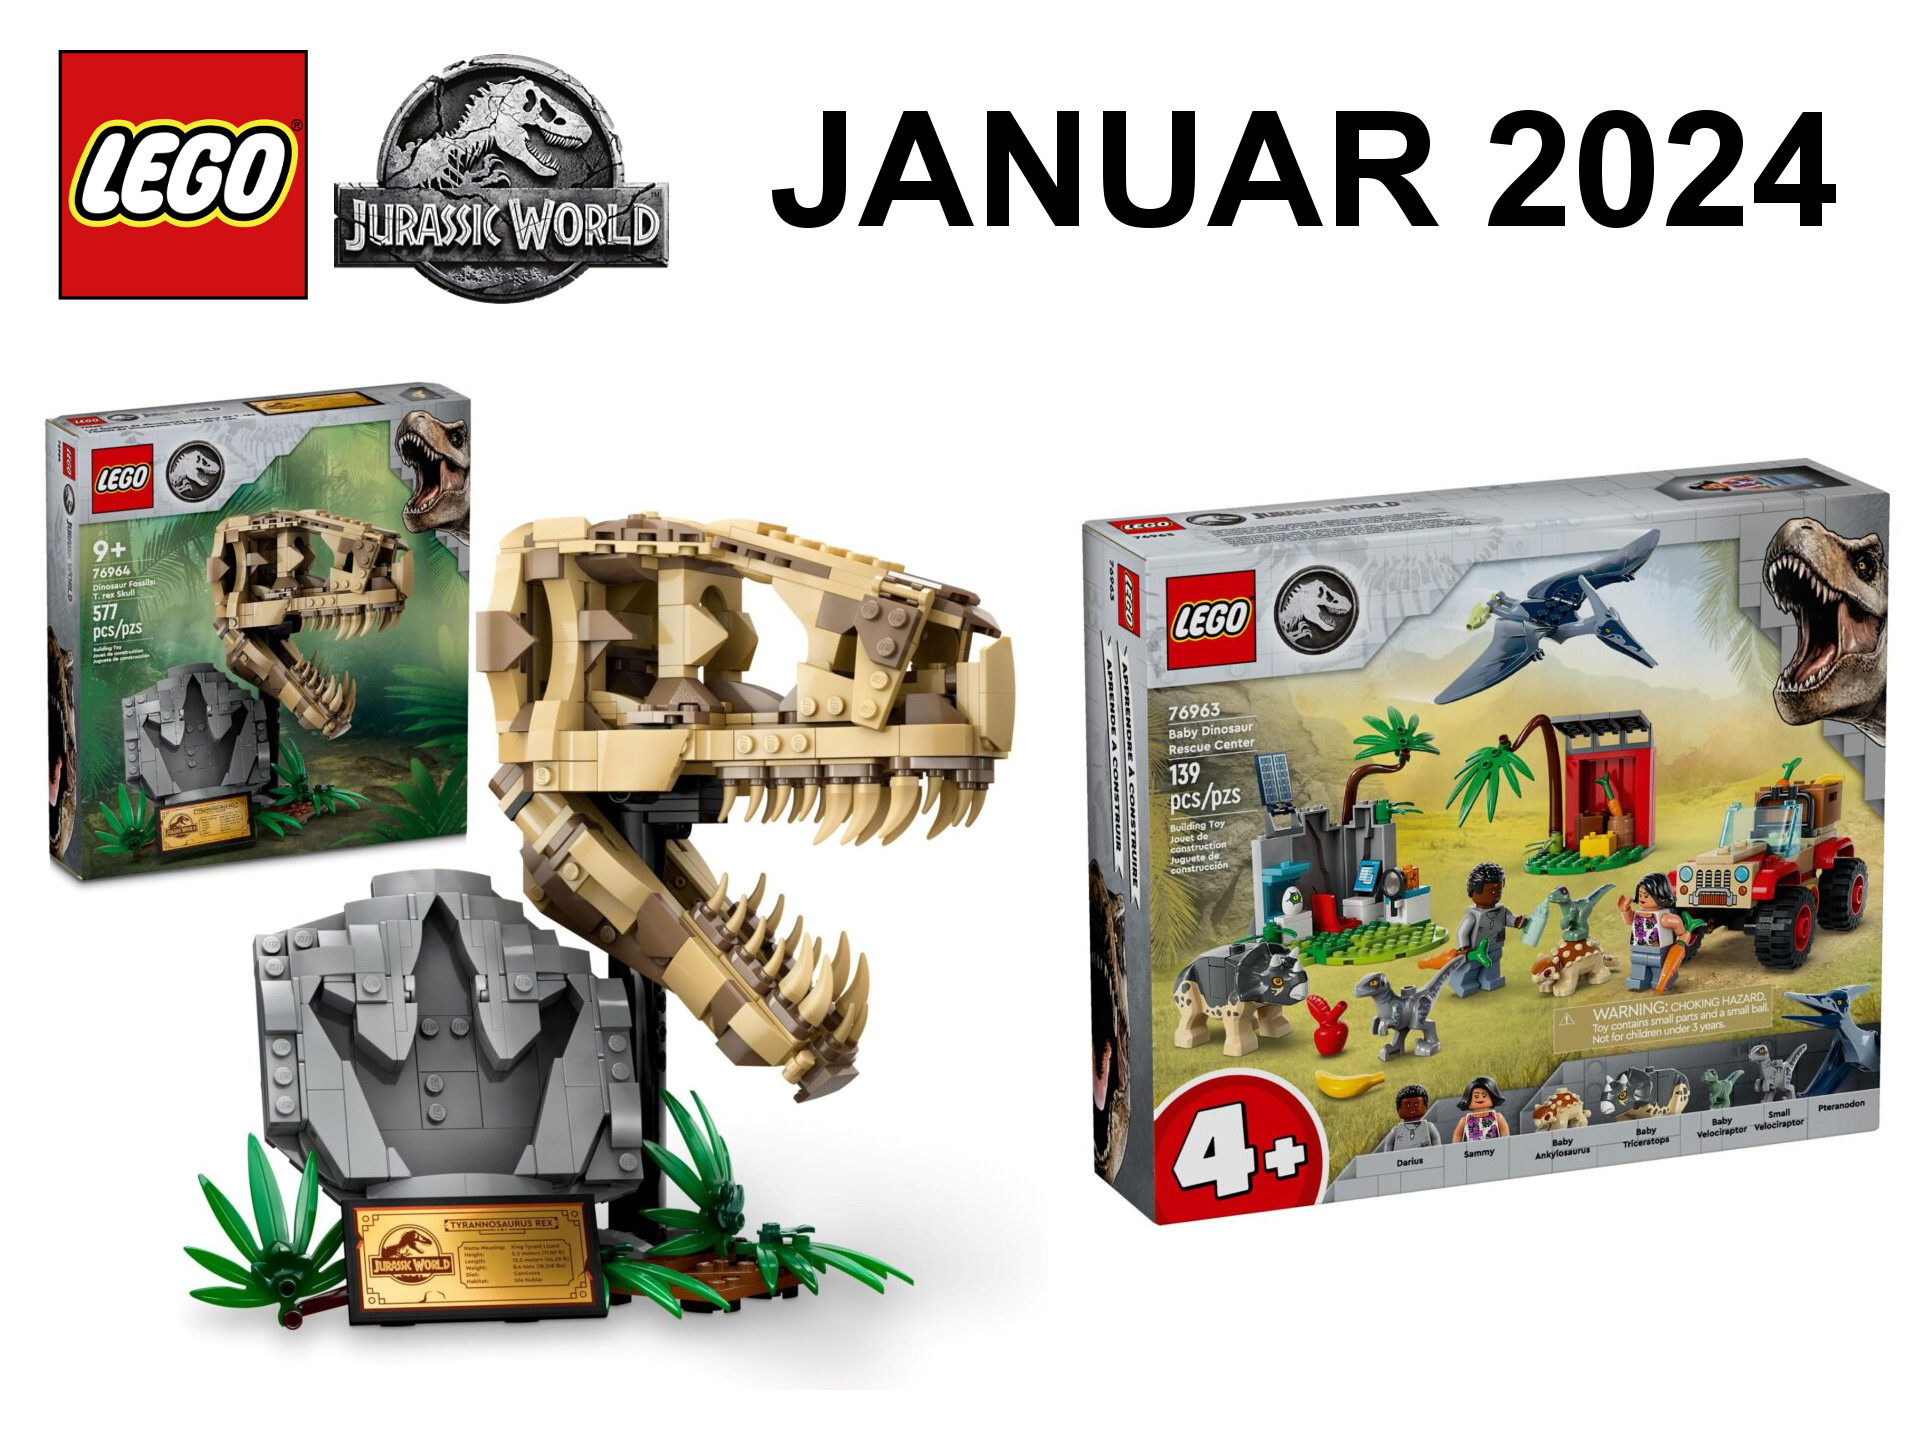 LEGO Jurassic World Neuheiten Januar 2024 - Brickzeit